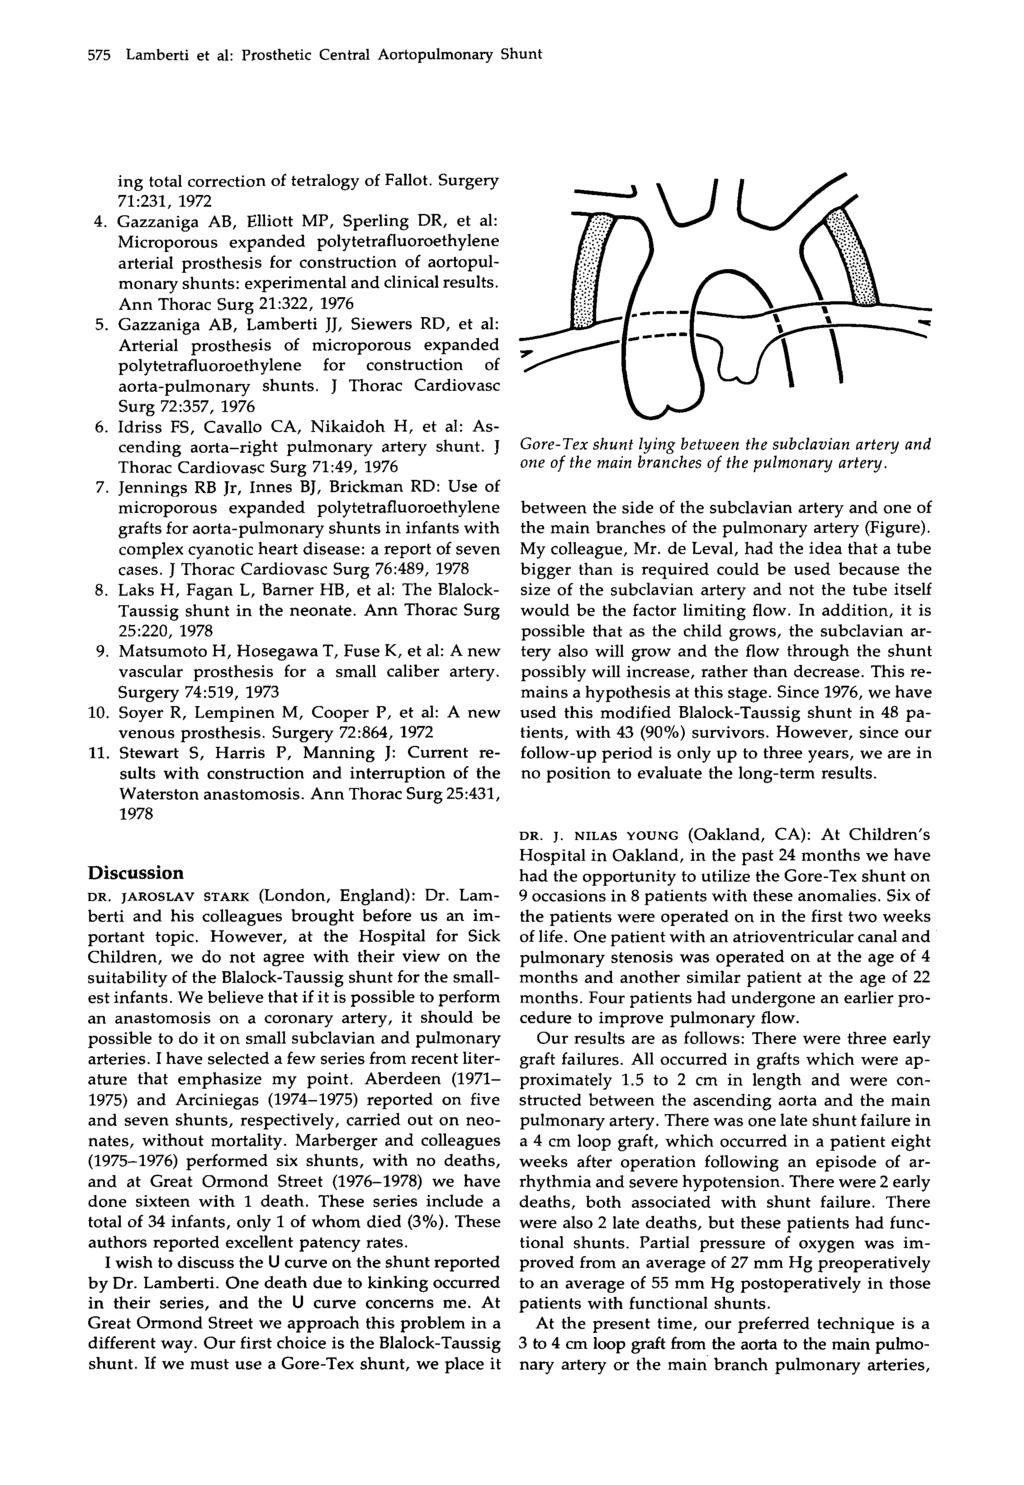 575 Lamberti et al: Prosthetic Central Aortopulmonary Shunt ing total correction of tetralogy of Fallot. Surgery 71231, 1972 4.